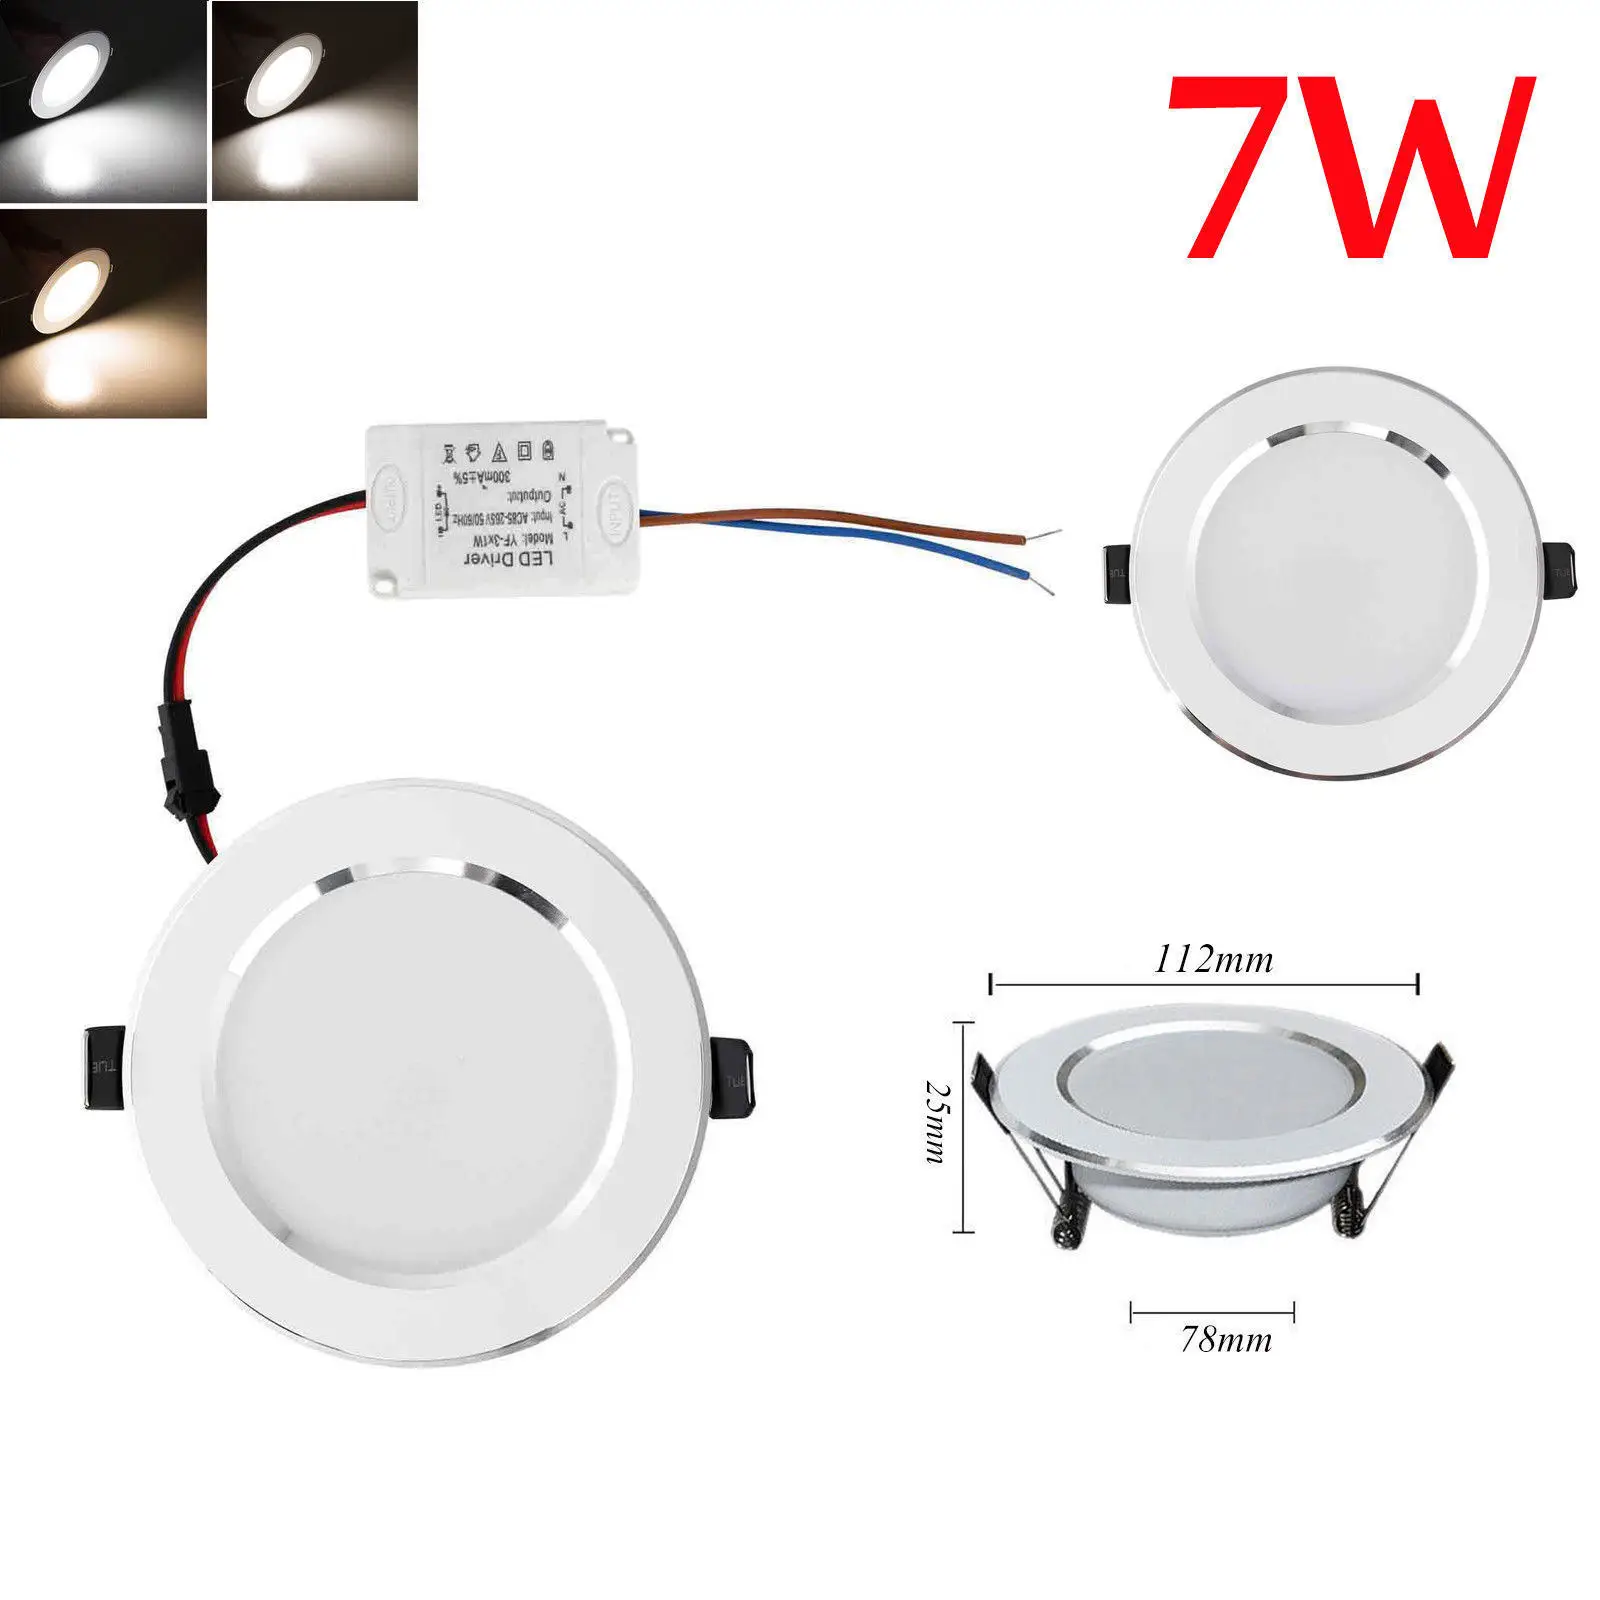 3W 5W 7W 9W 12W 15W 18W Dimmable LED Recessed Ceiling Down Light Lamp AC 85-265V 